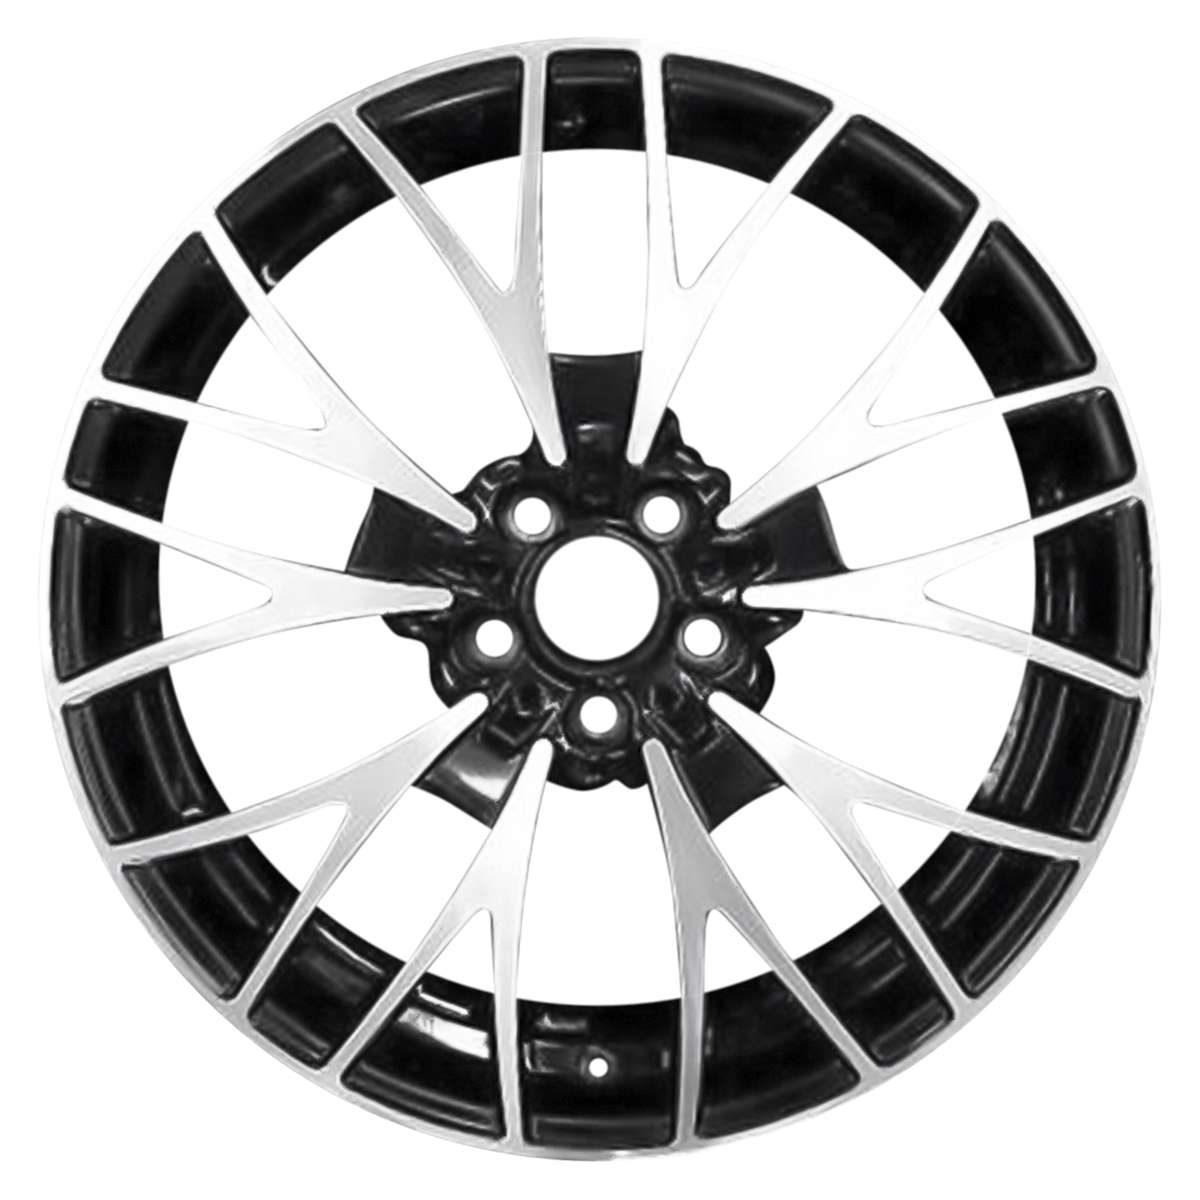 2014 BMW 328i 20" Front OEM Wheel Rim W71548MB